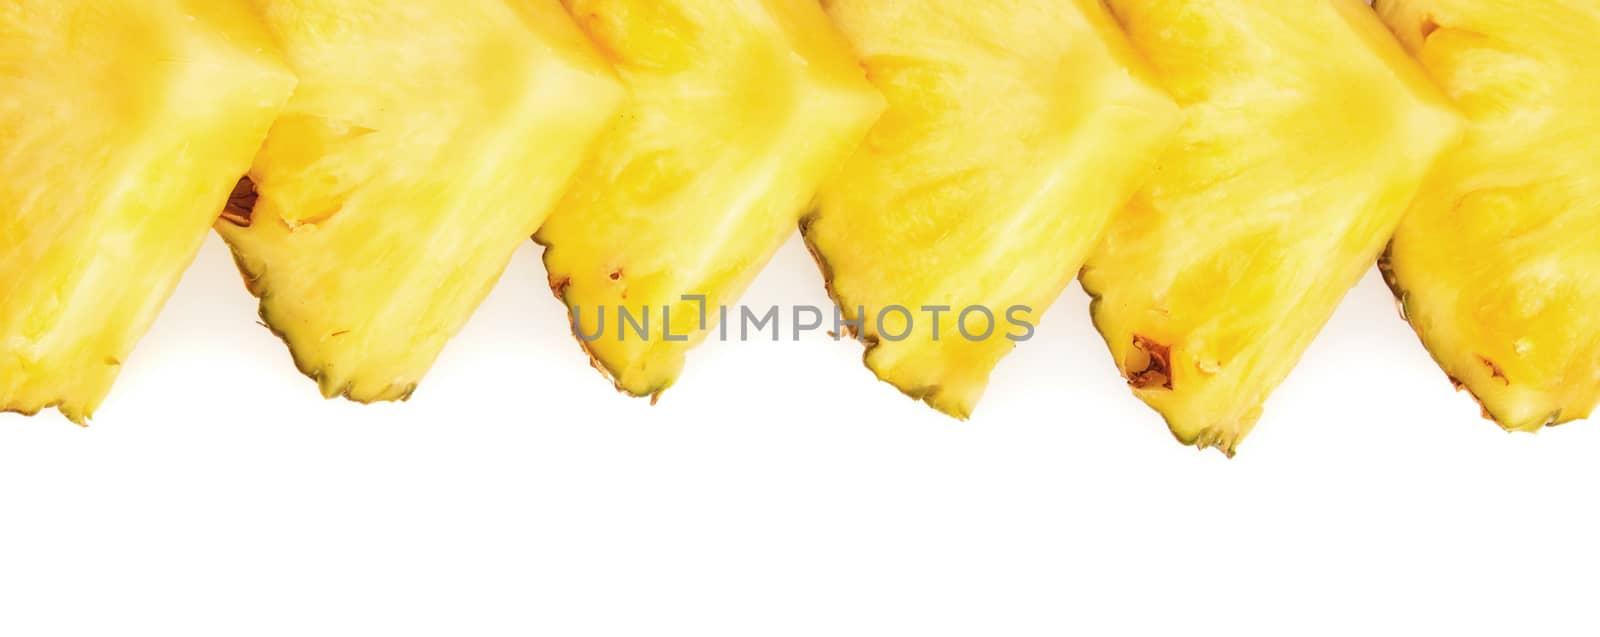 Pineapple slices by Valengilda